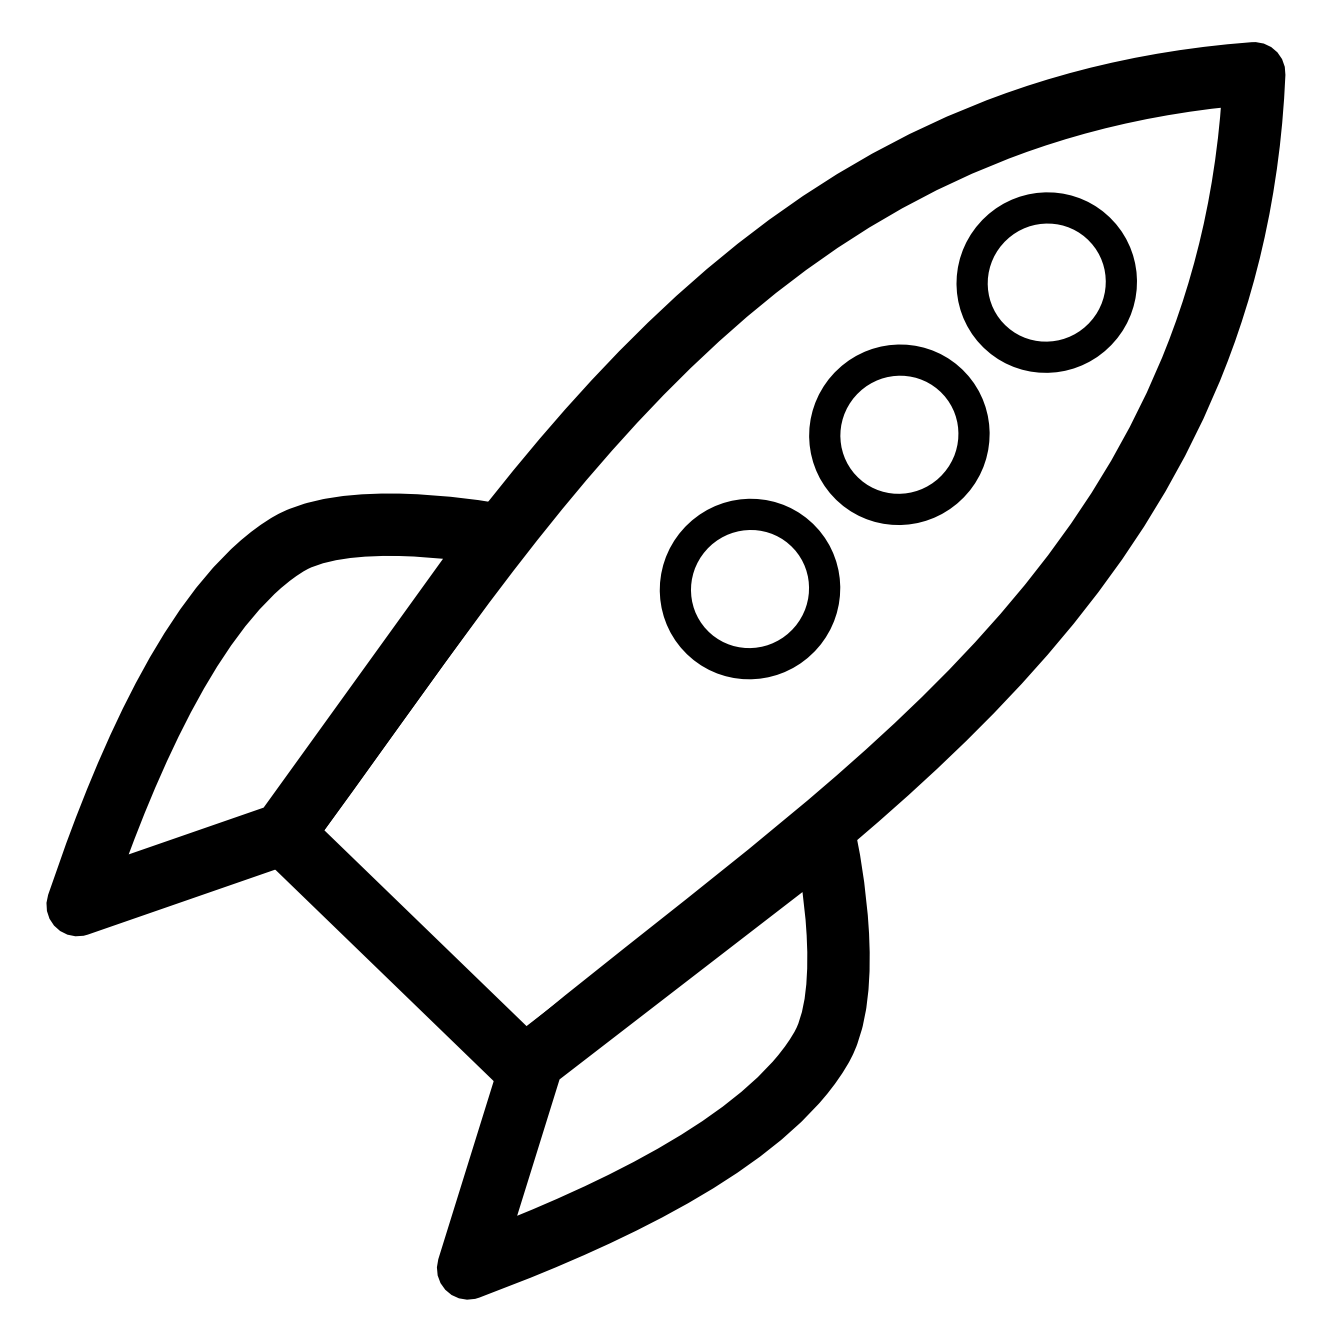 Space rocket clip art image search results clipart image 2 clipartix